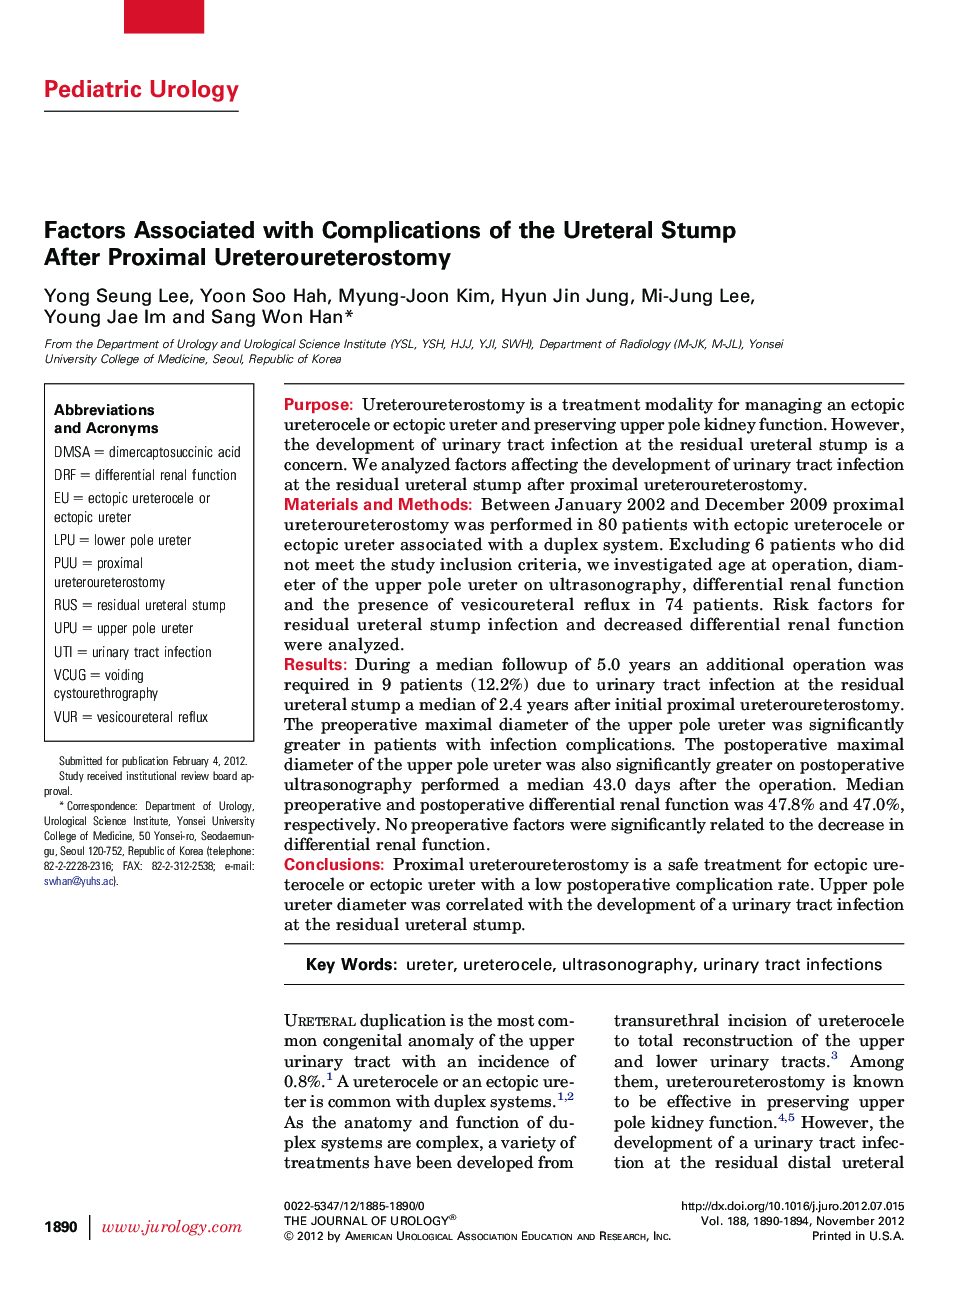 Factors Associated with Complications of the Ureteral Stump After Proximal Ureteroureterostomy 